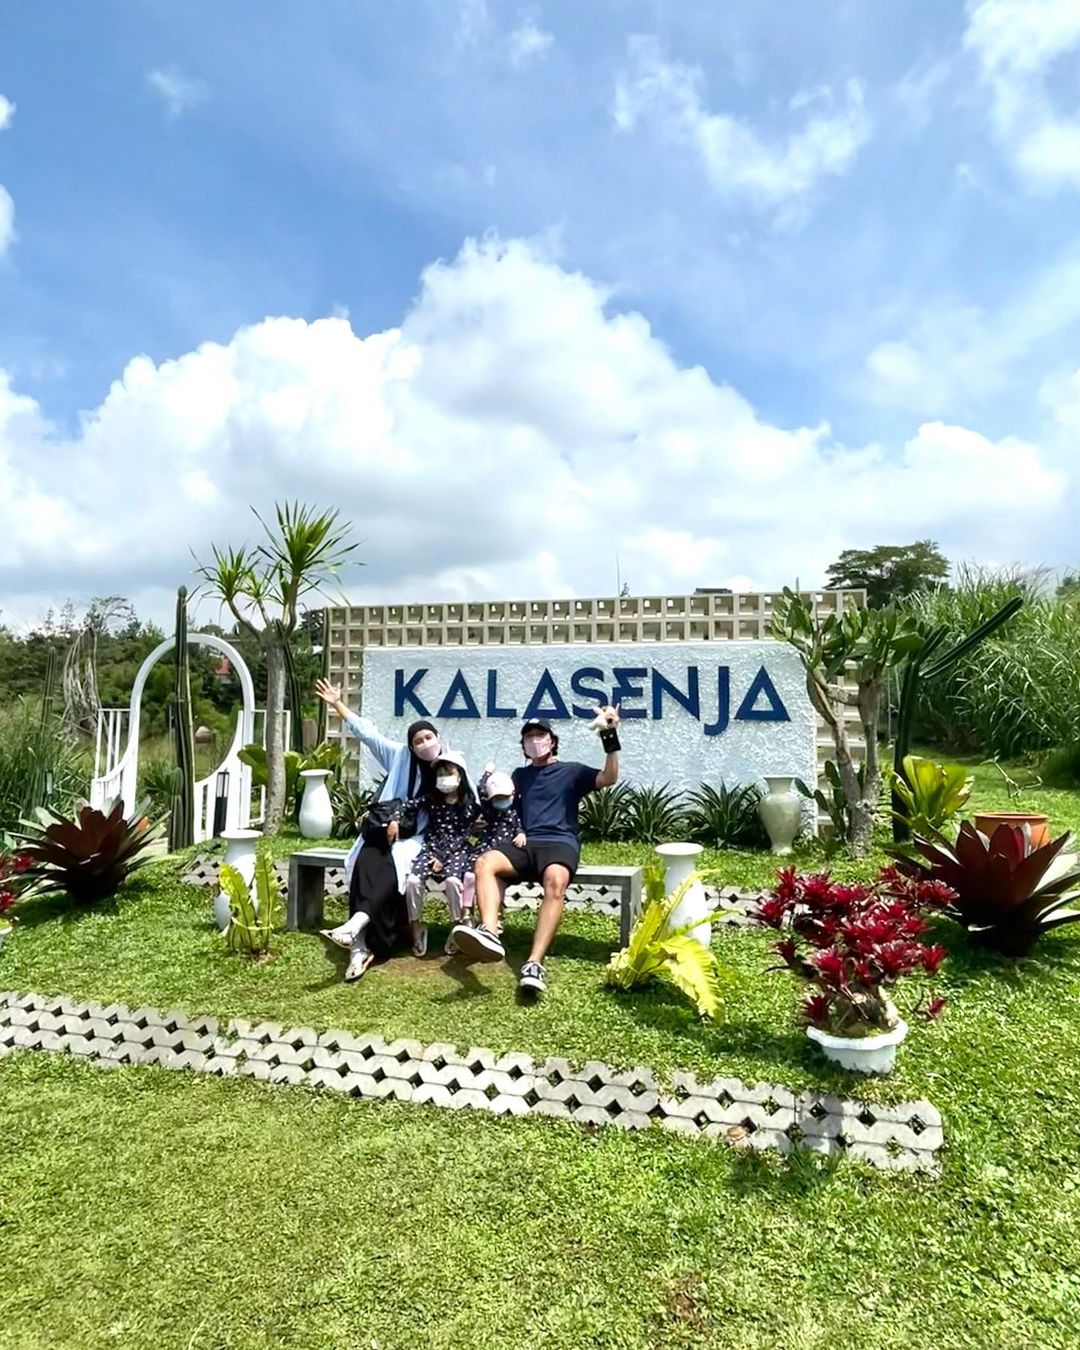 Review Kalasenja Cimahi Bandung Image From @qmichan